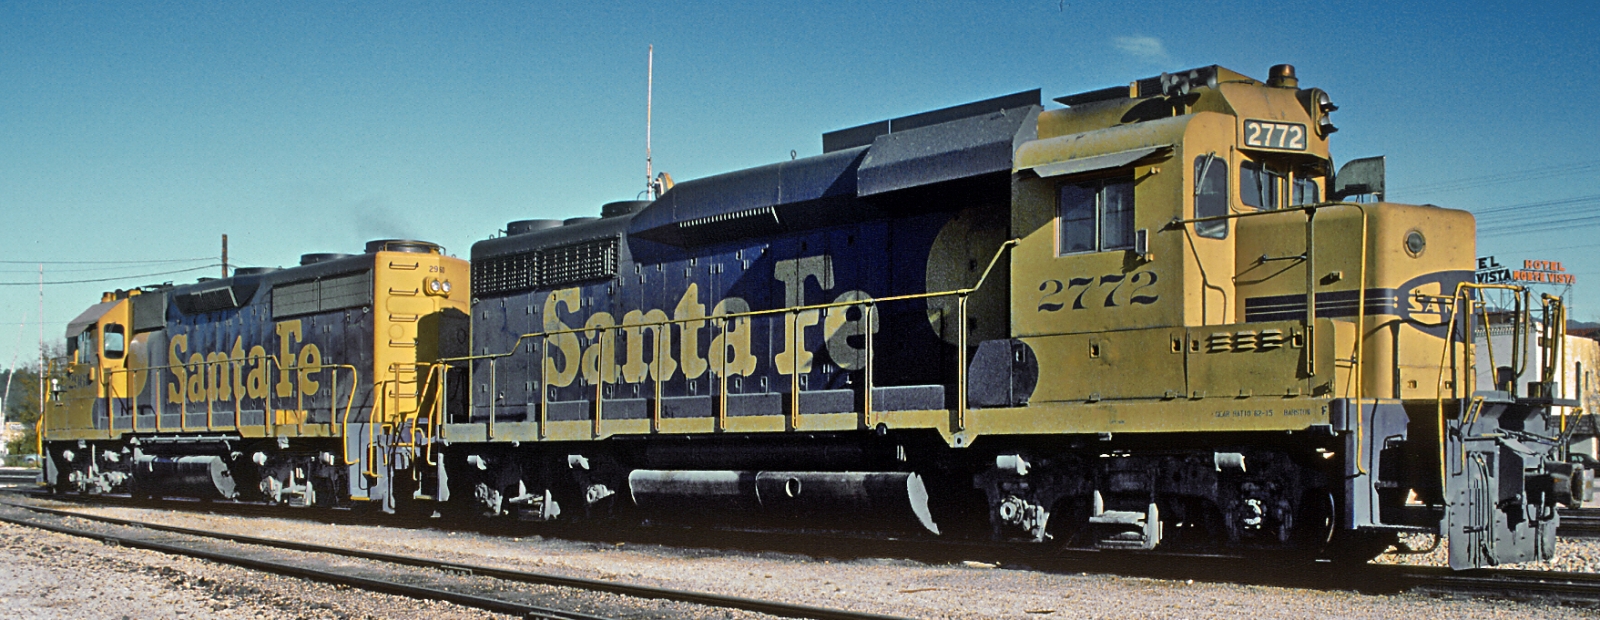 Two Santa Fe GP30s in 1985 in Flagstaff, Arizona